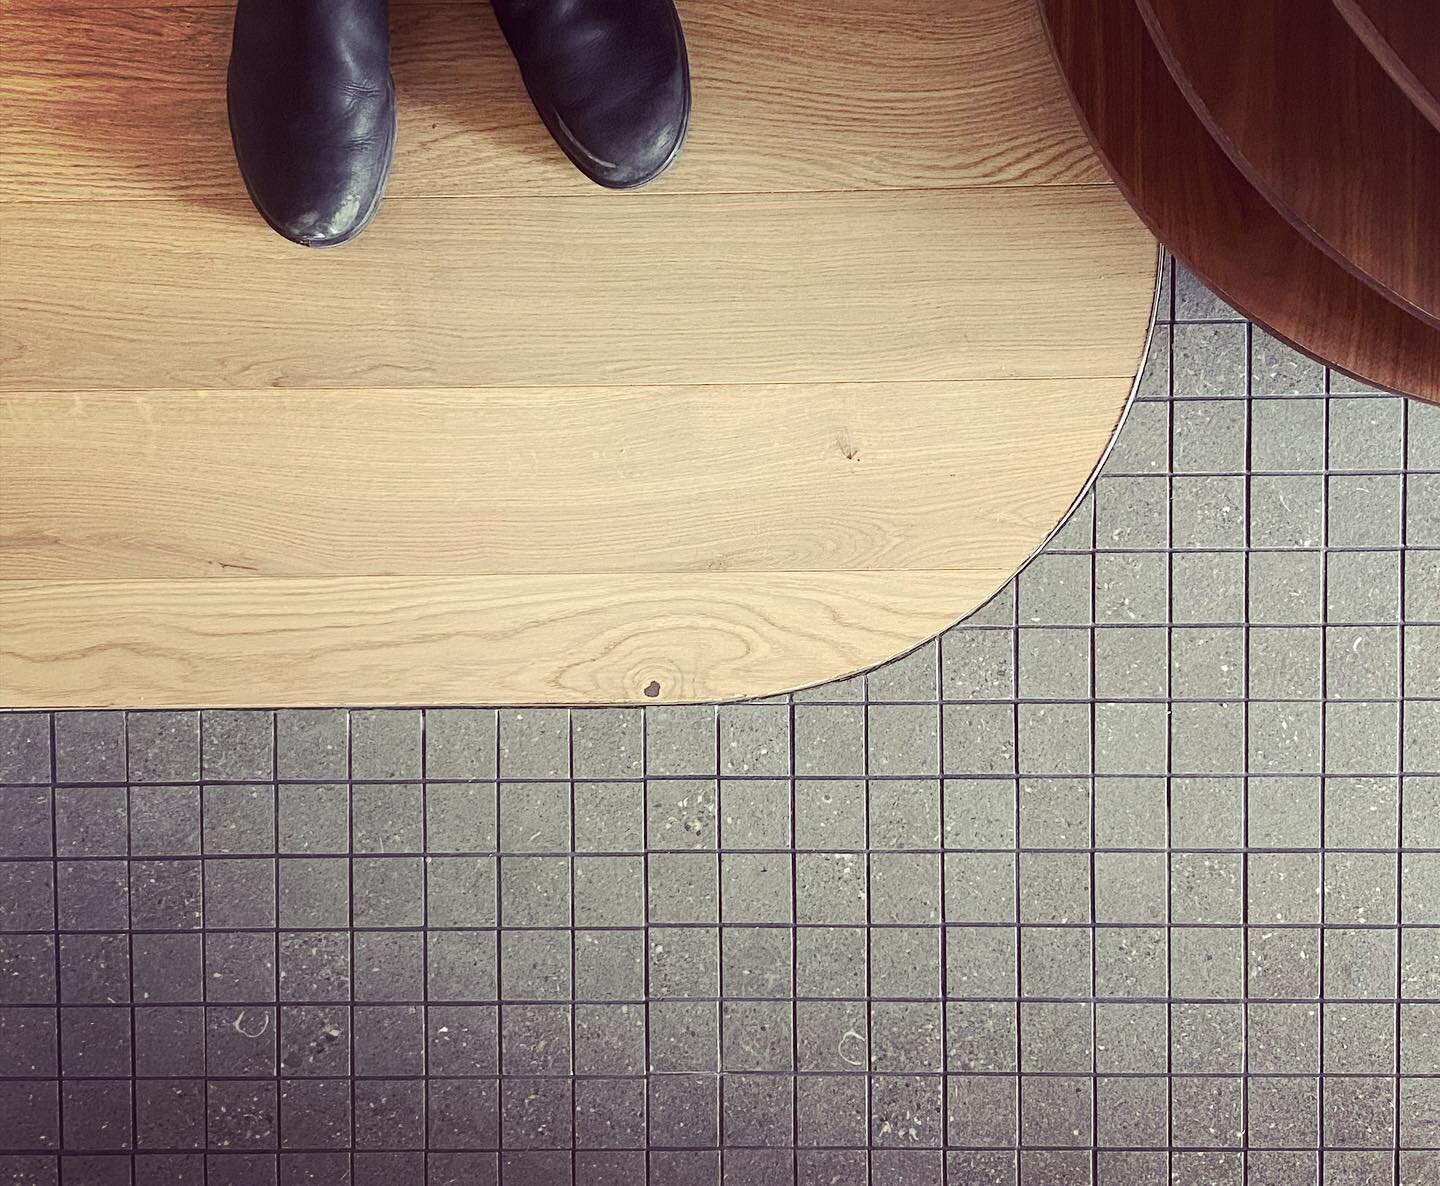 Sneak peak.

#architecturelovers #flooringdetails #flooring #grid #flooringtransitions #fillet #porcelaintiles #walnut #millwork #renoinspo #modernkitchen